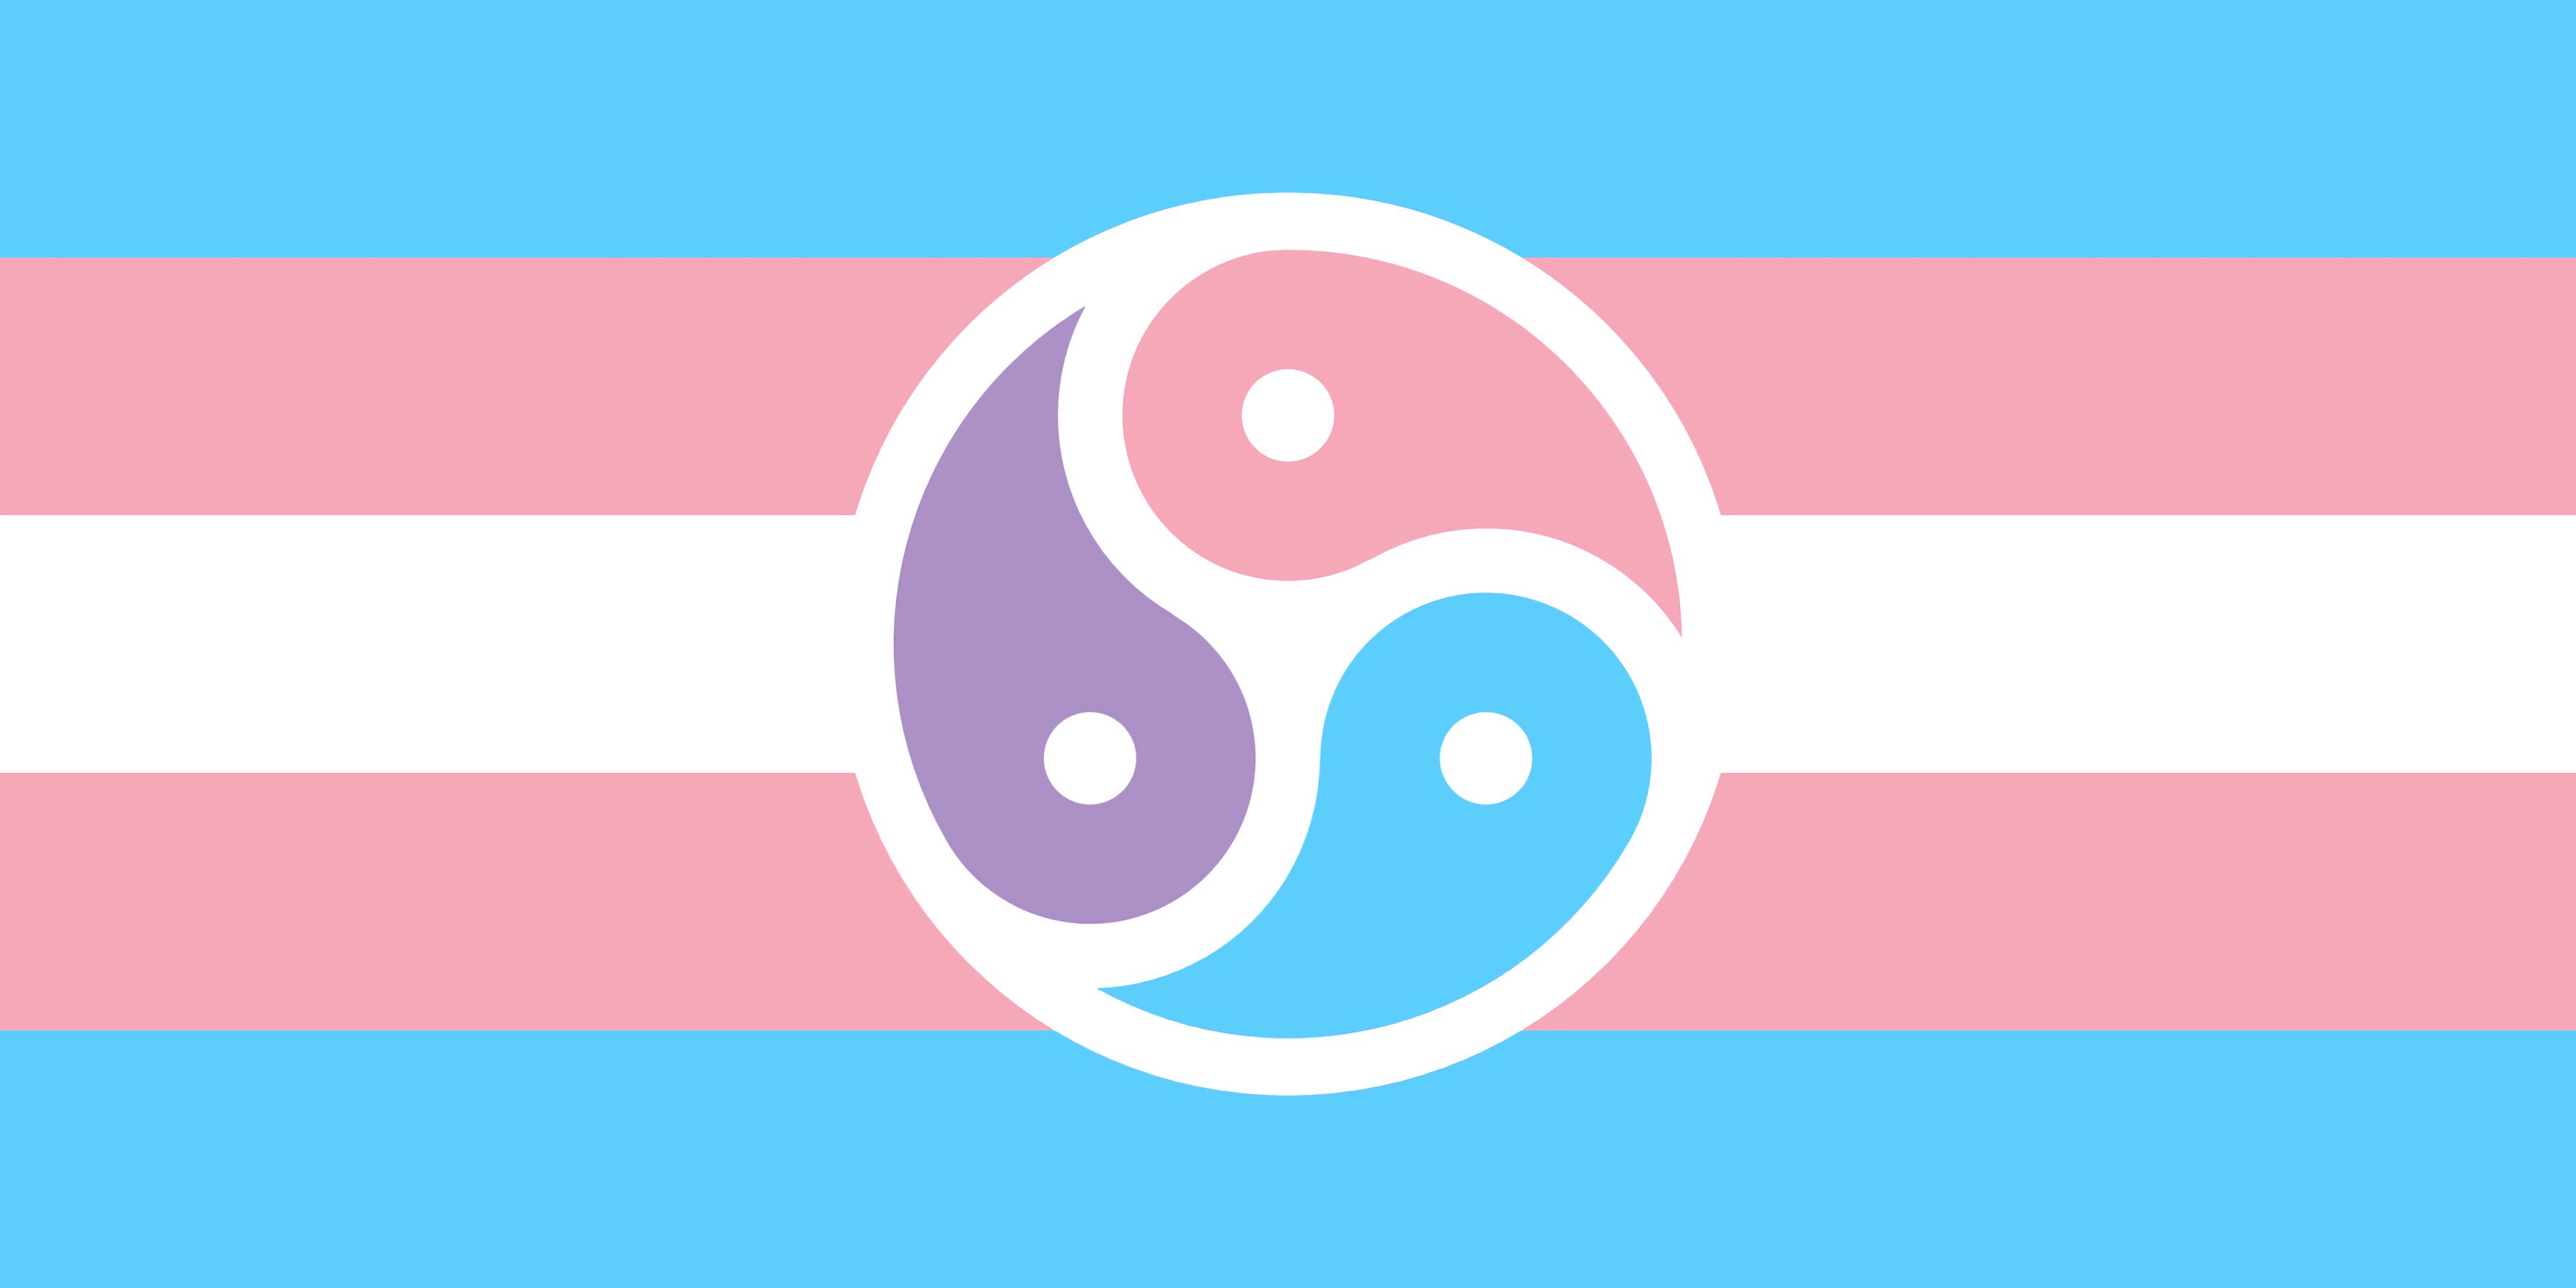 Morning Rainbow Lgbt Pride Flag Lipstick Lesbian Agender Demisexual Aromantic Asexual Gay Straight Transgender Flag